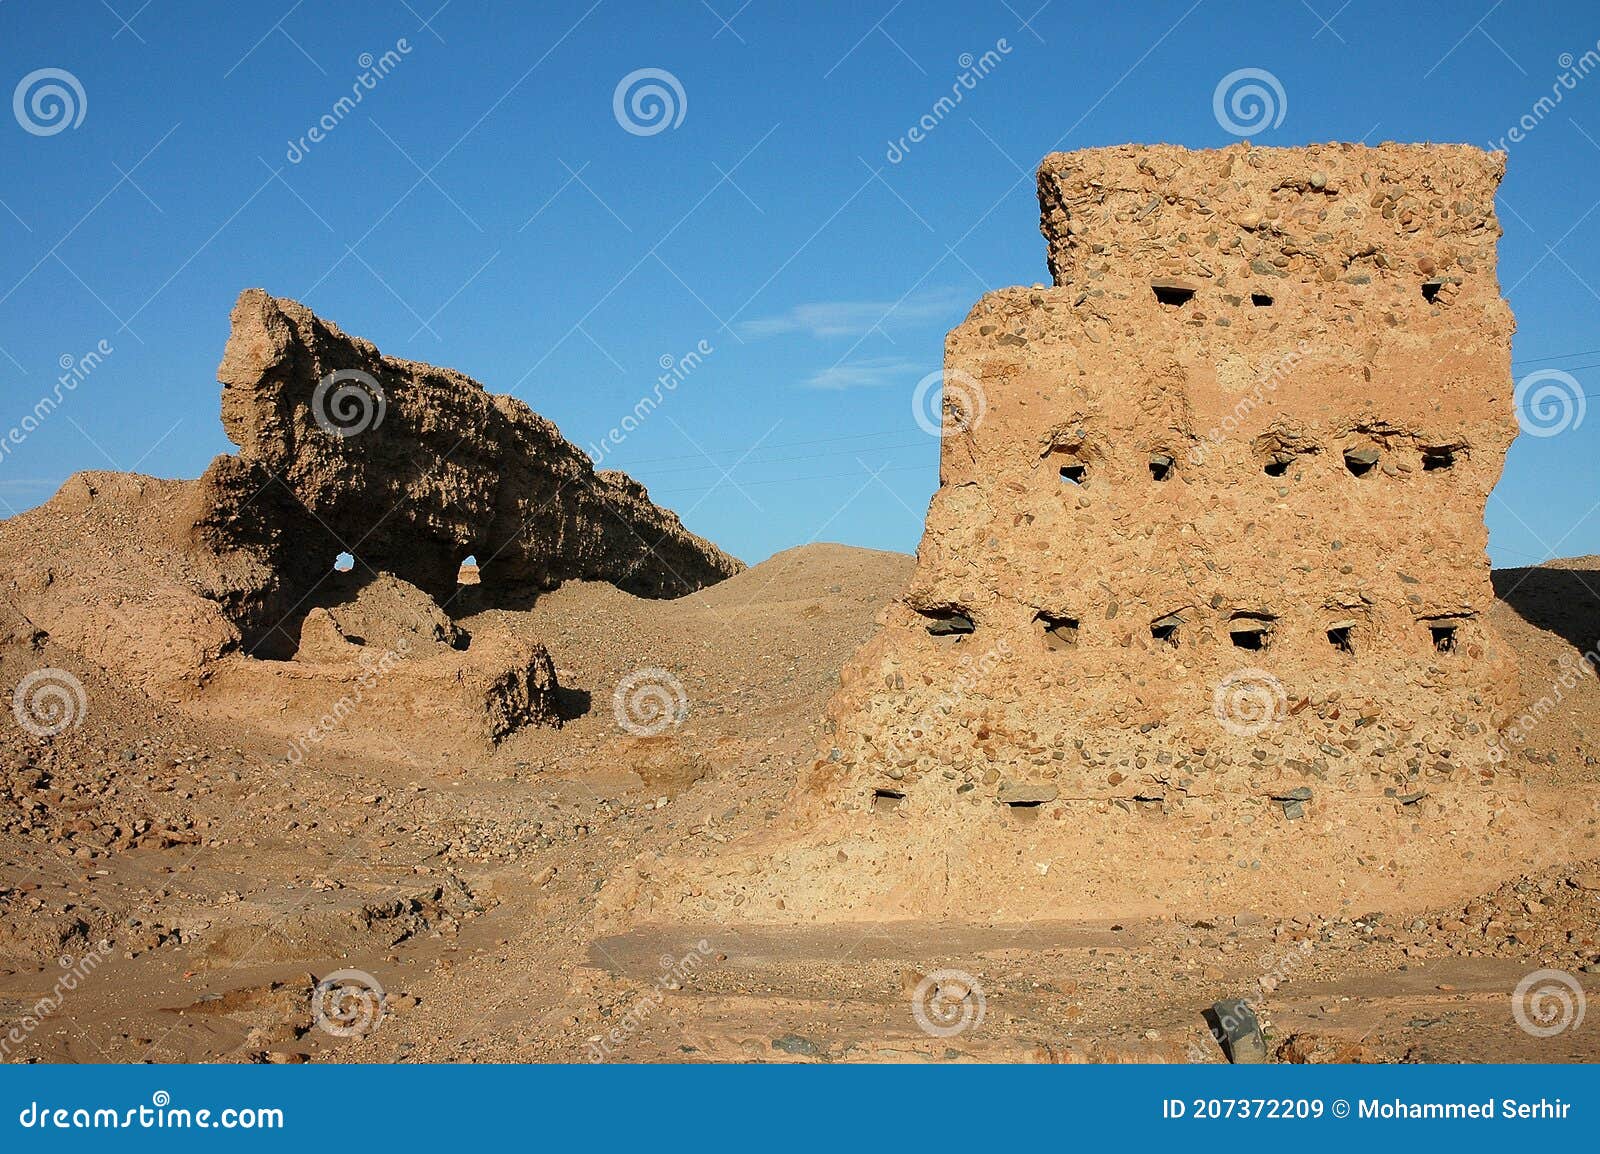 south-eastern morocco tafilalet and rissani